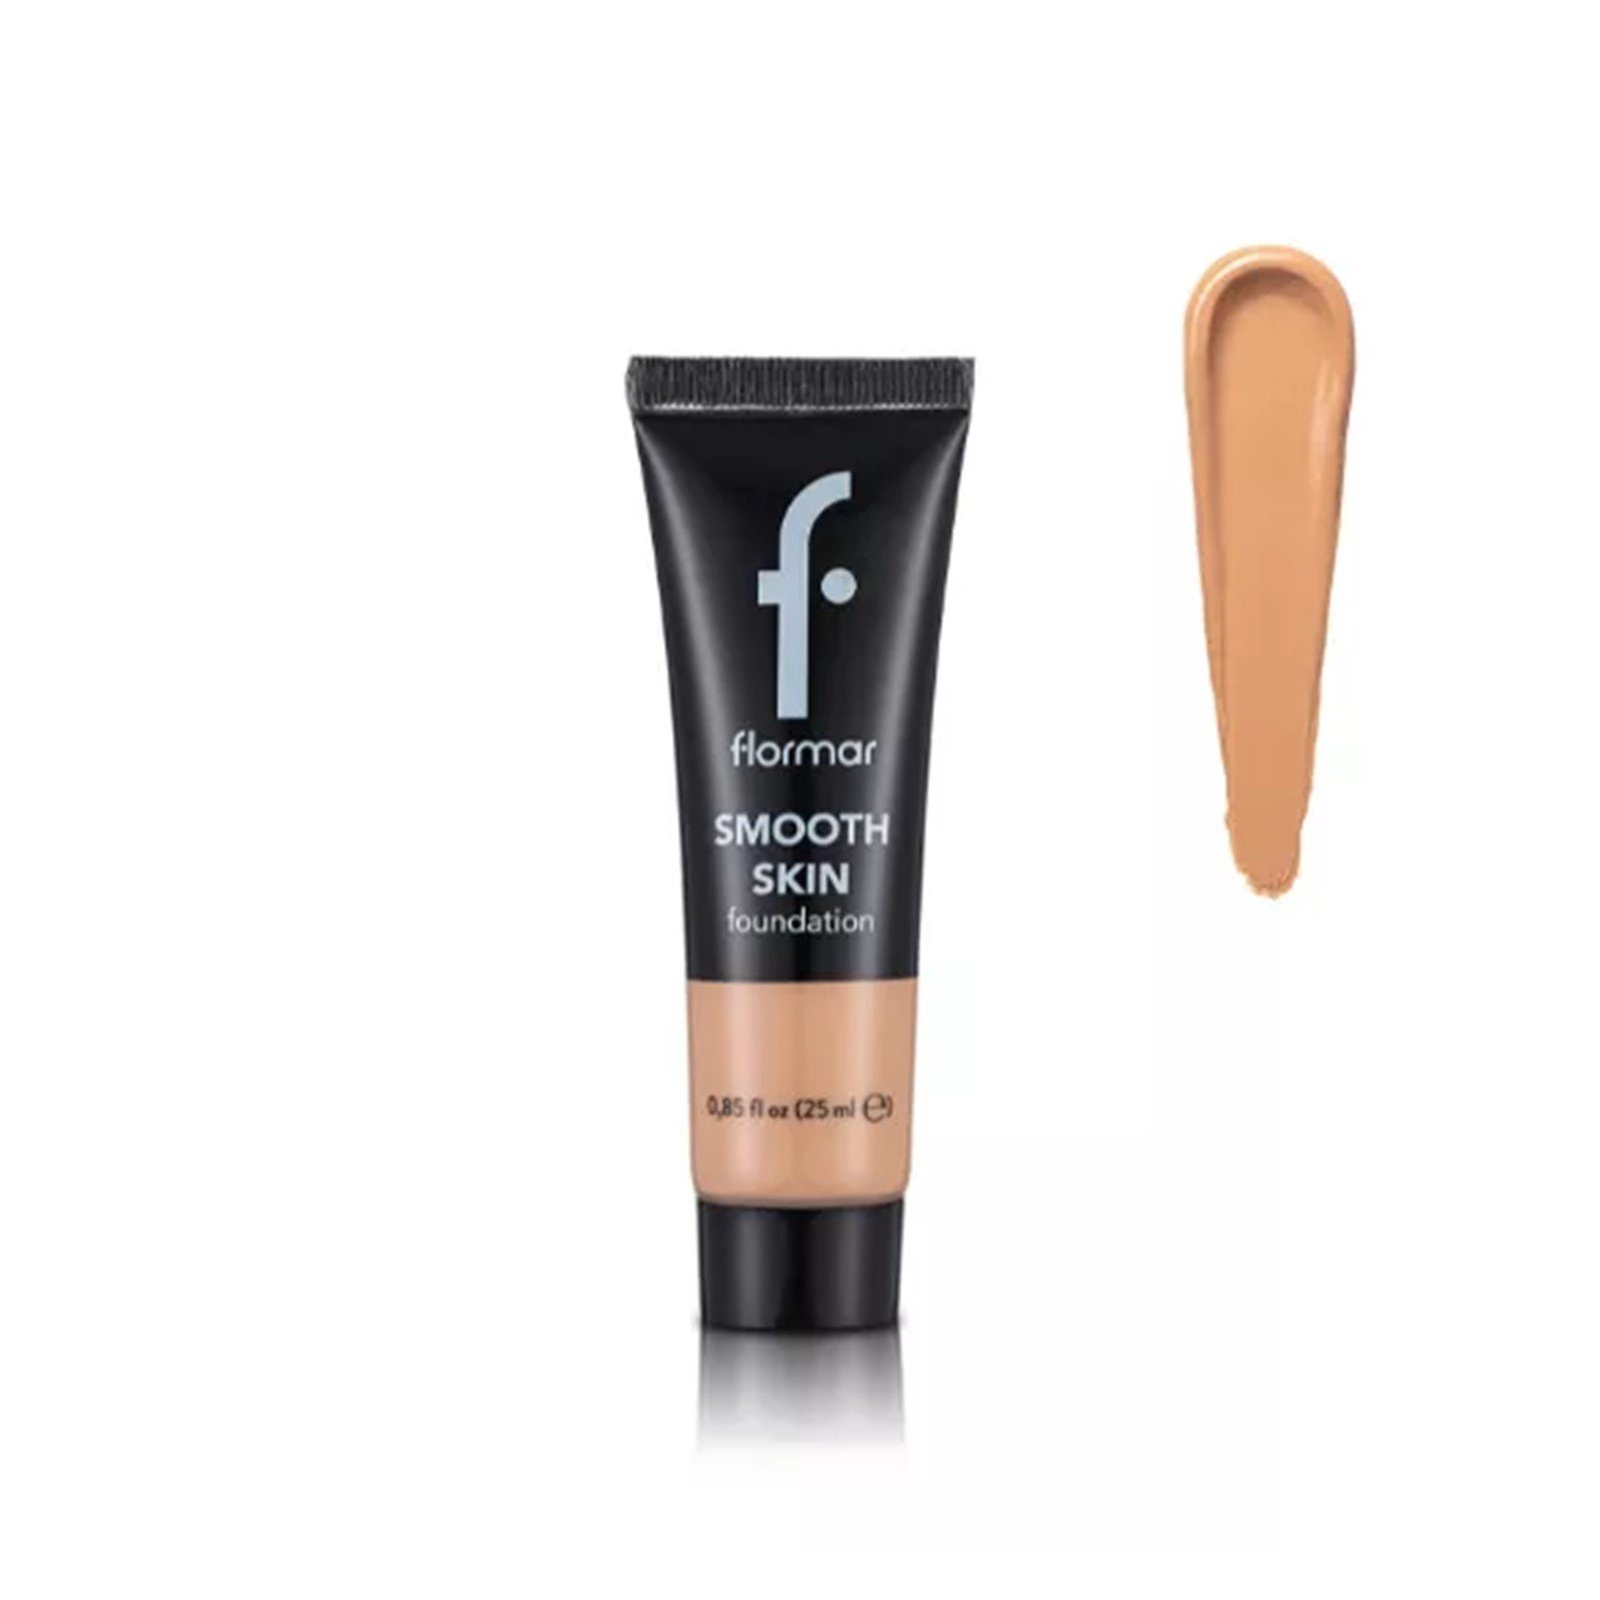 Flormar Smooth Skin Foundation 002 Pastelle 25ml